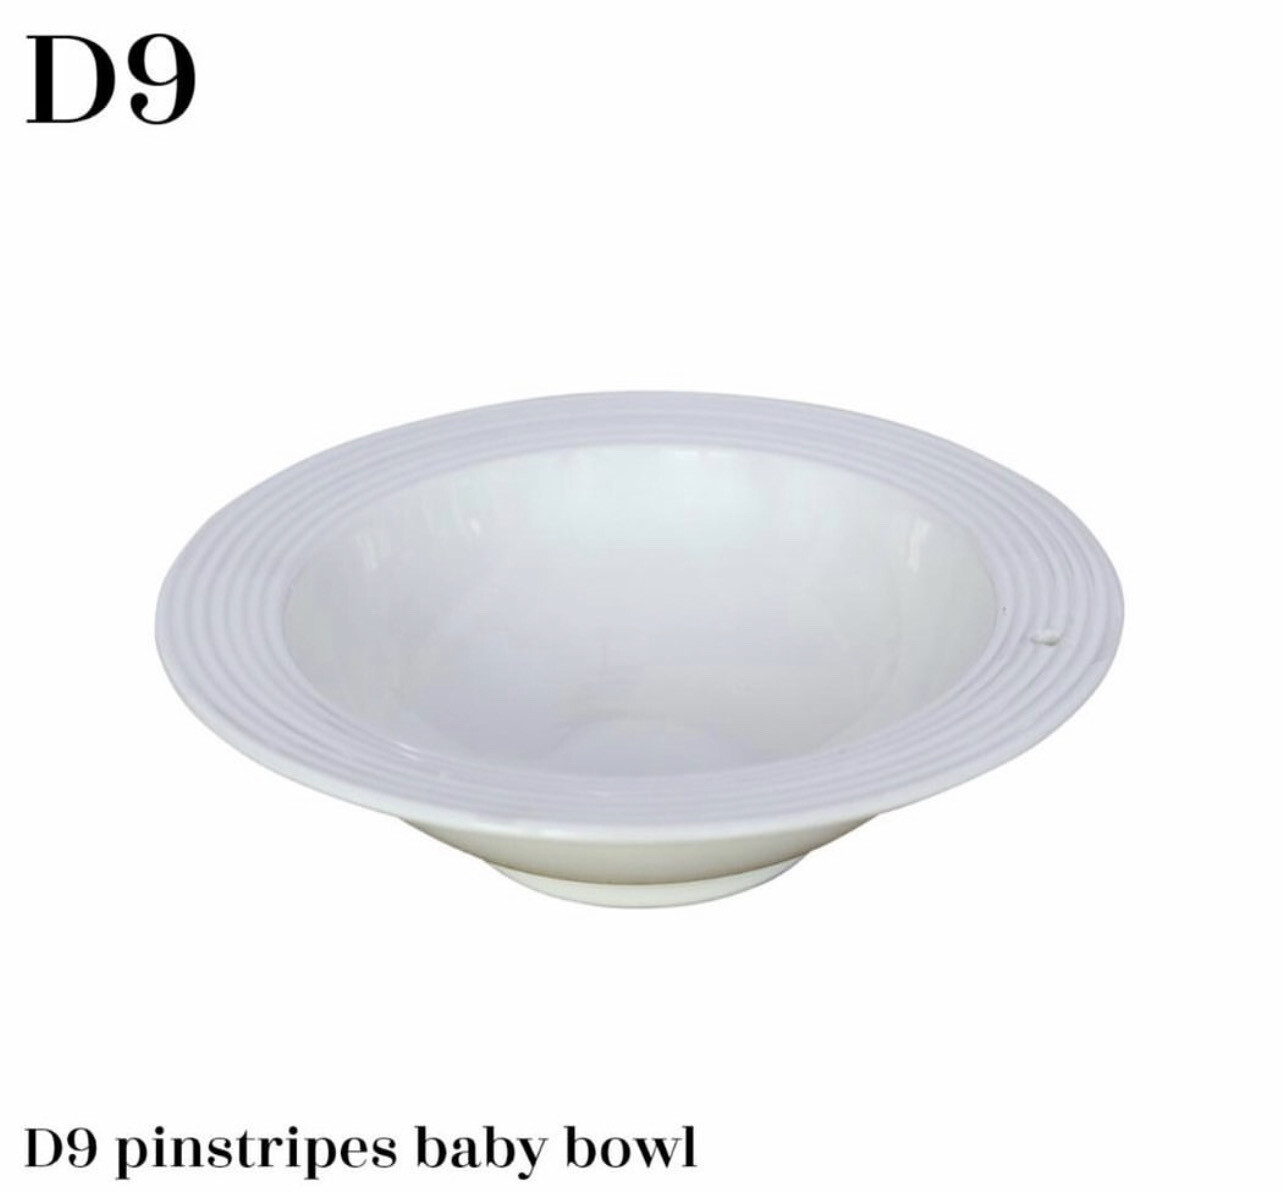 D9 Pinstripe Baby Bowl